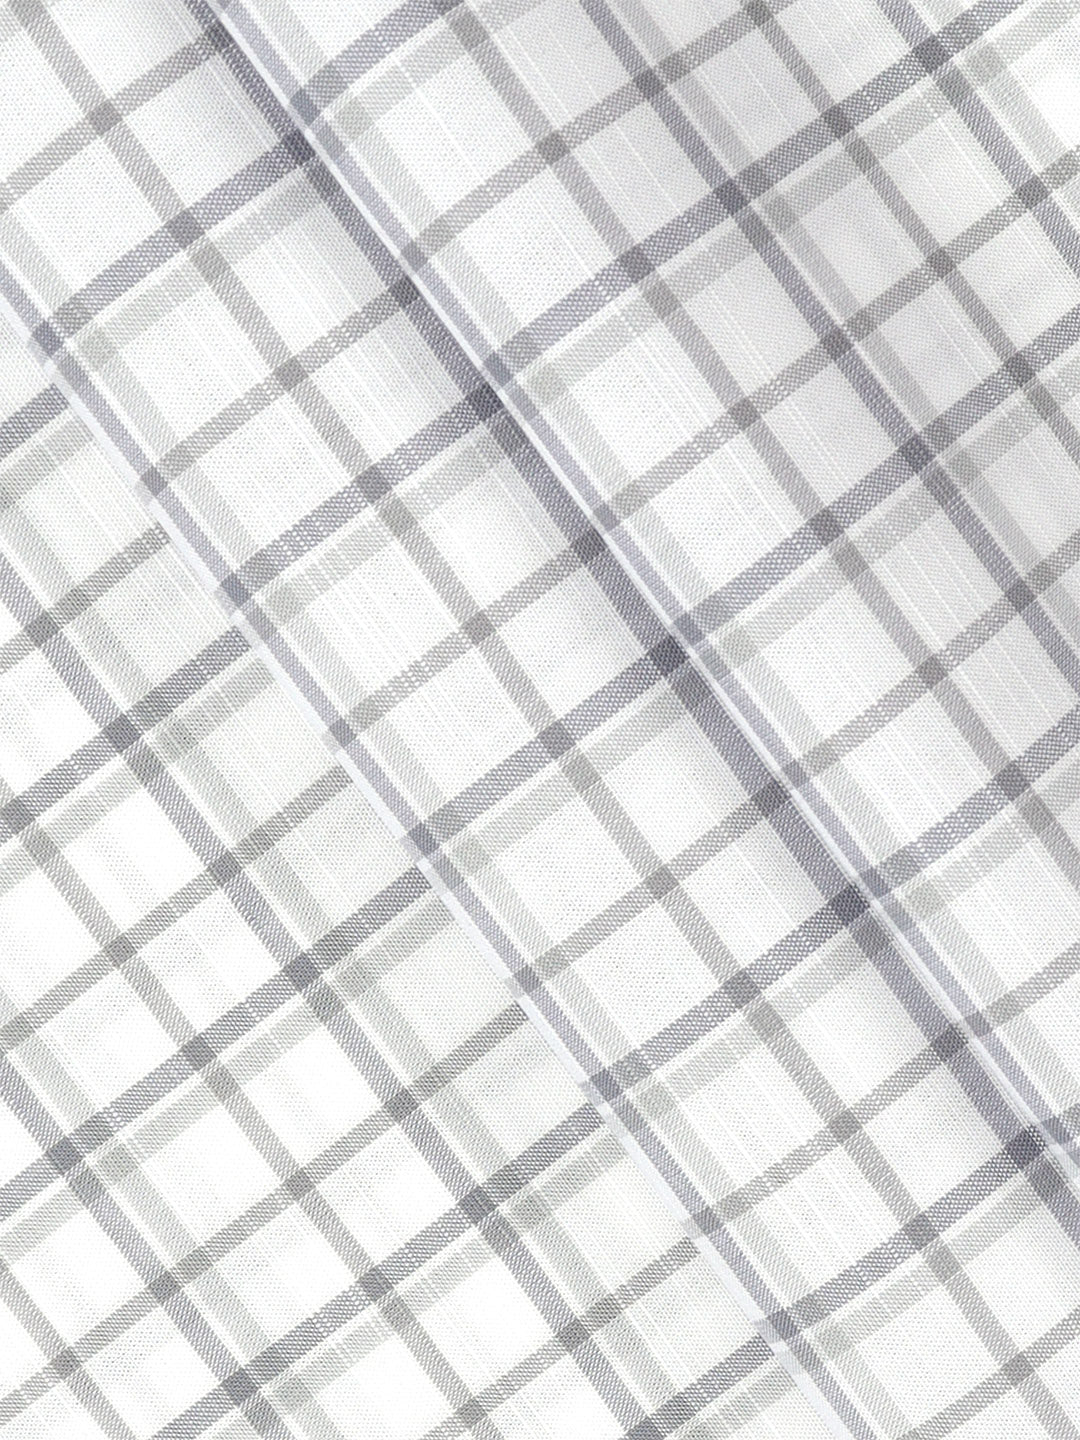 Cotton White &Grey Check Shirt Fabric-Liberty Cotton